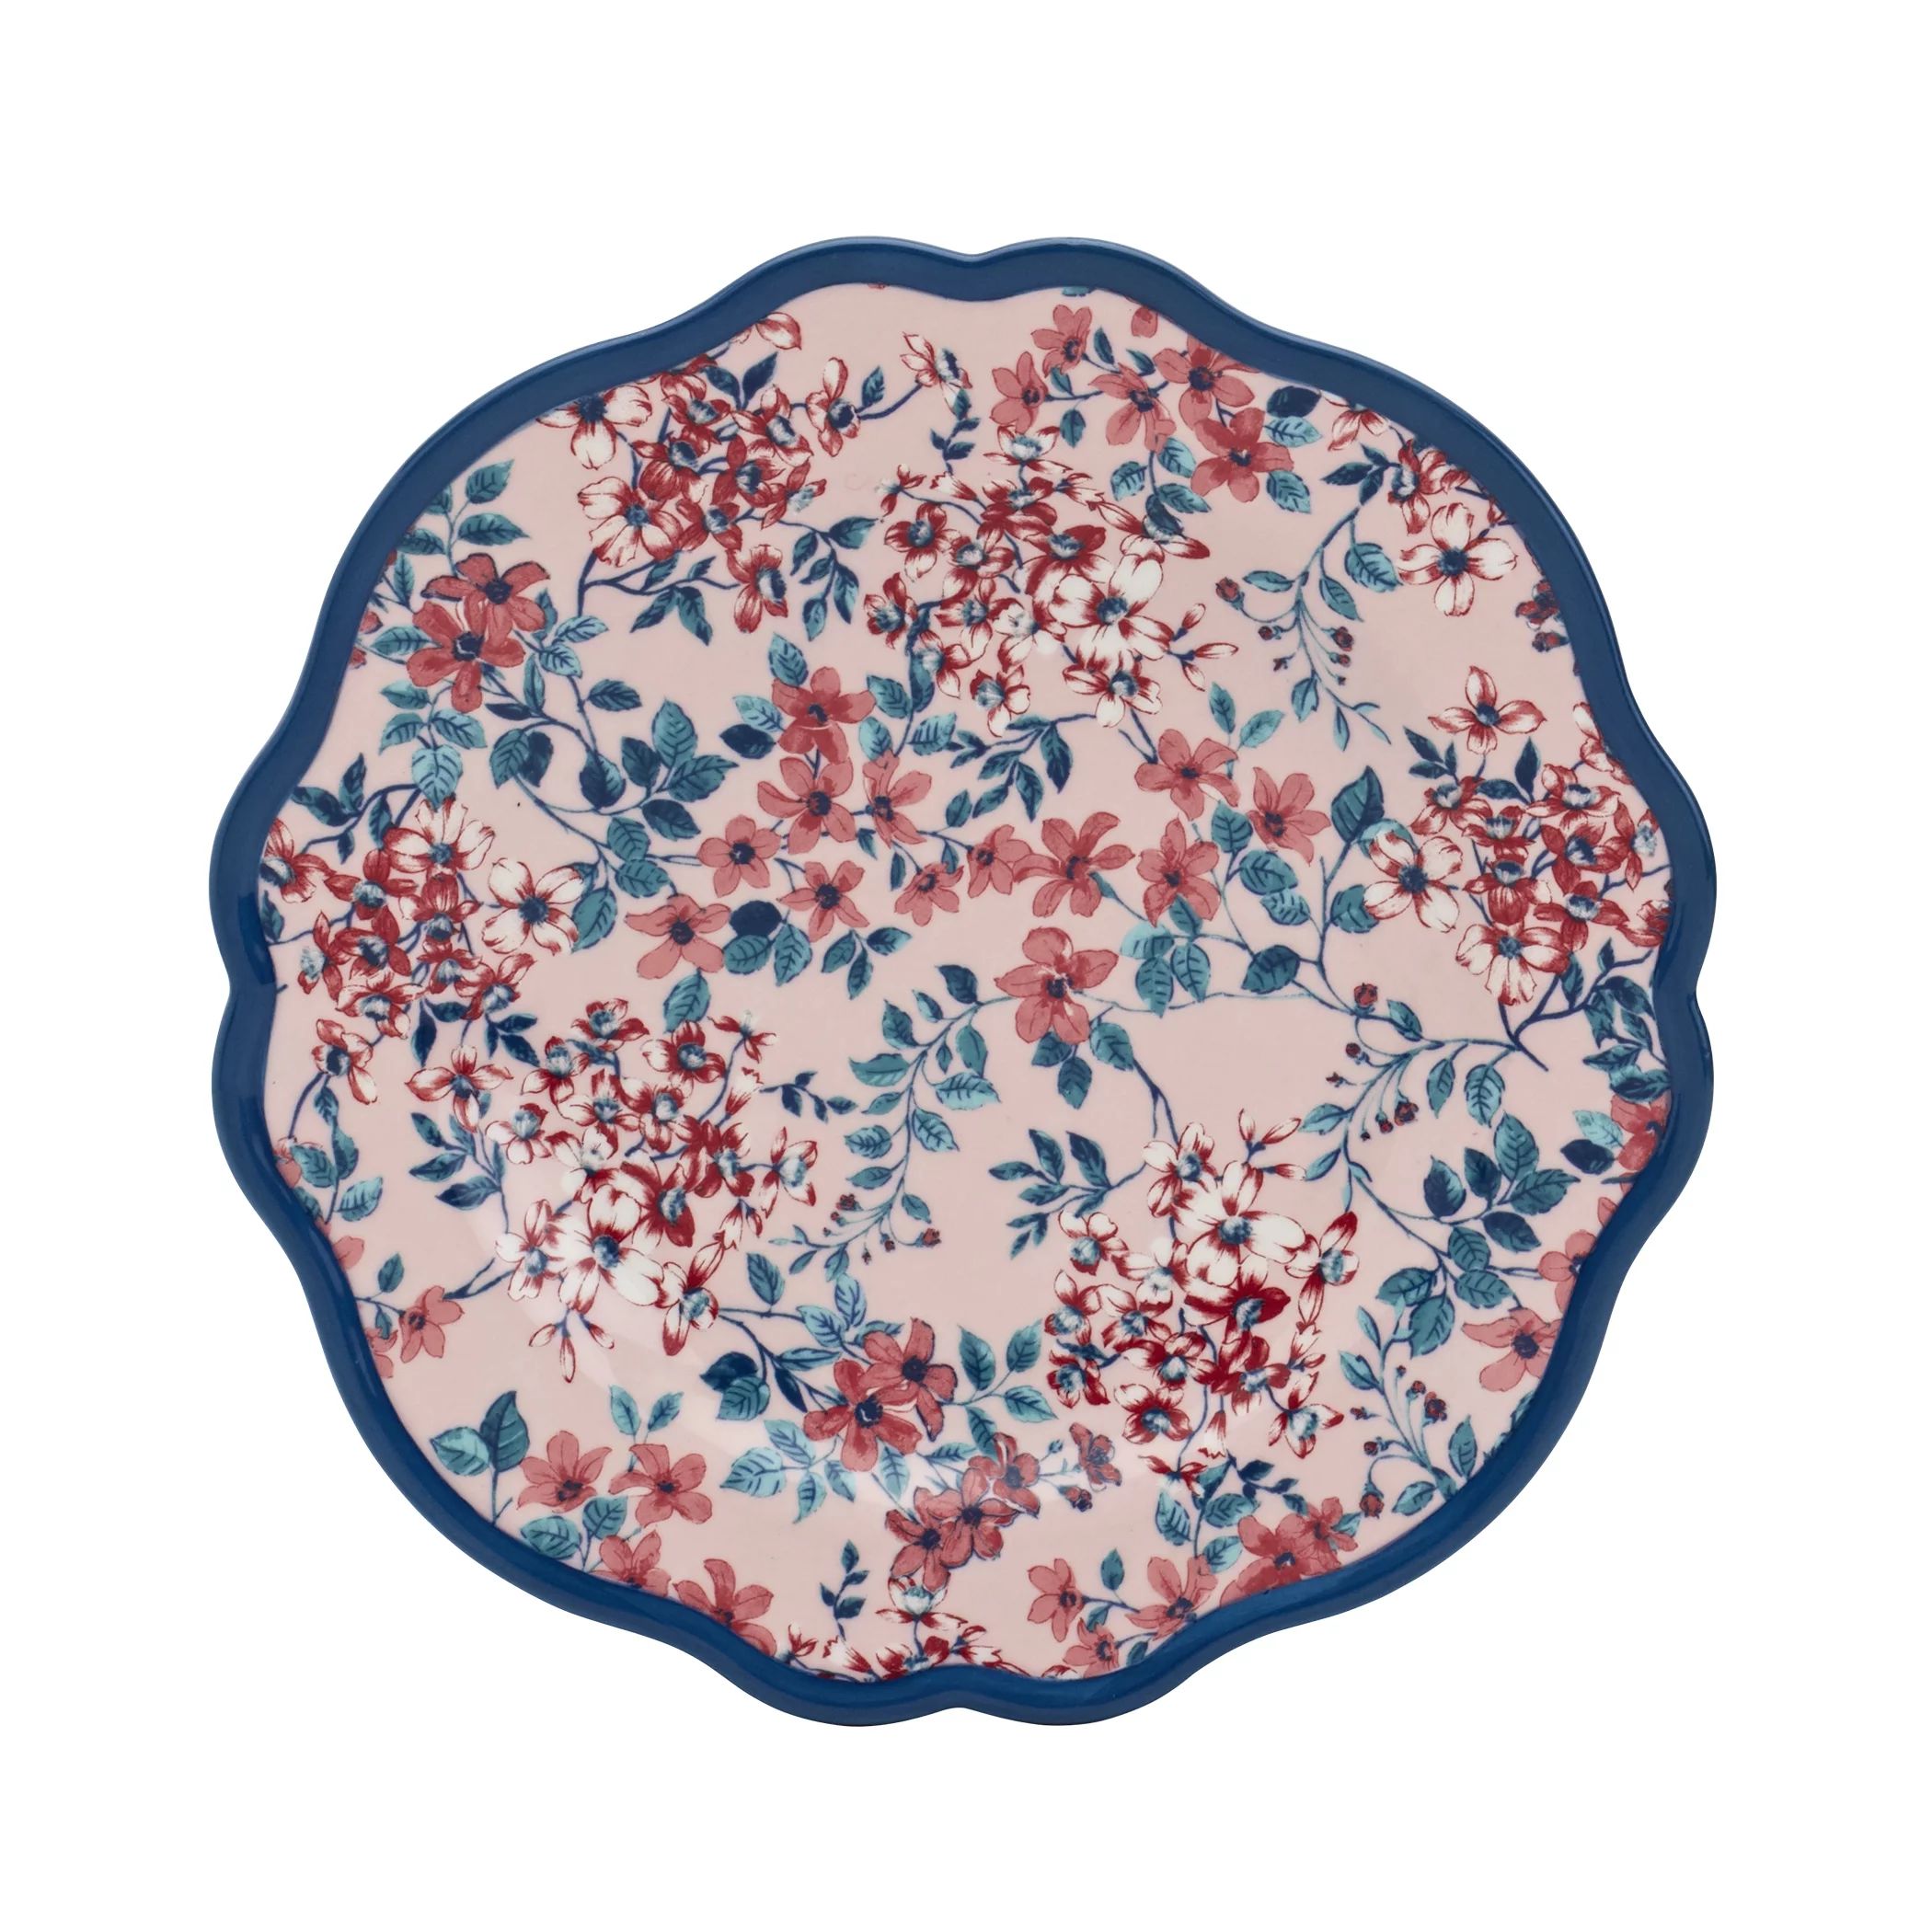 The Pioneer Woman Pretty Posies 8.75" Salad Plate - Blue Floral Stoneware | Walmart (US)